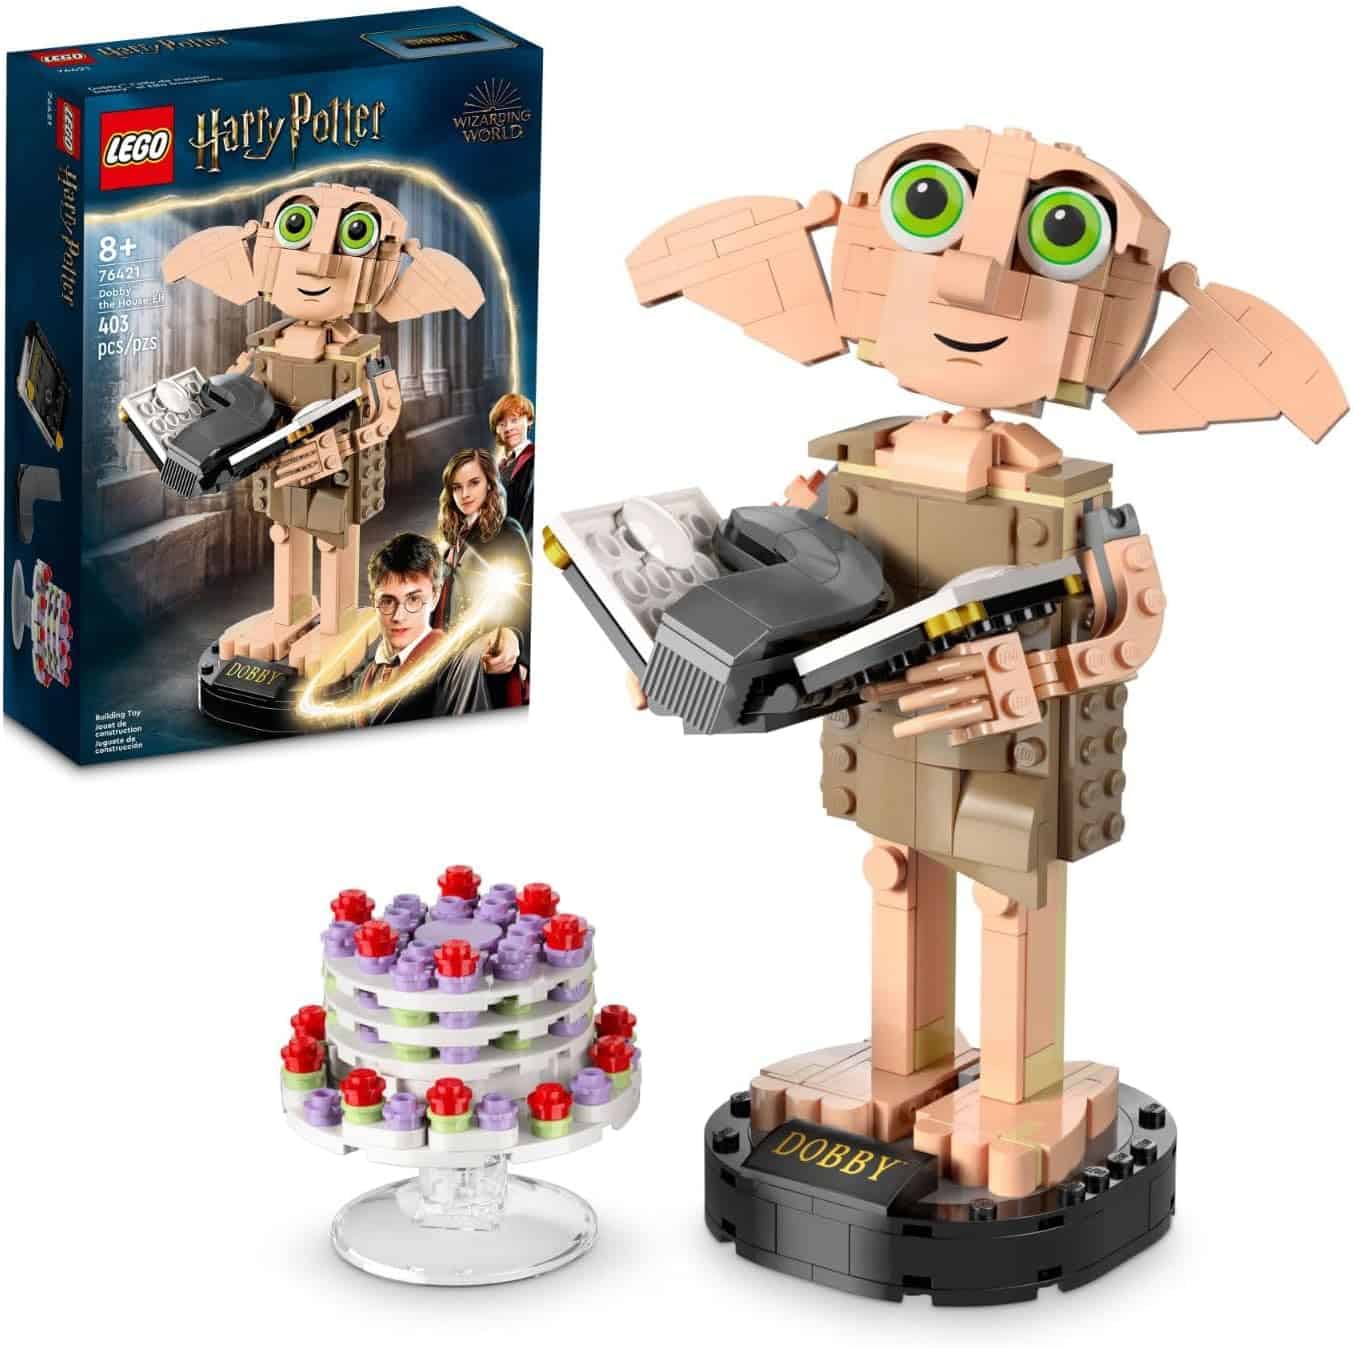 LEGO Harry Potter Dobby